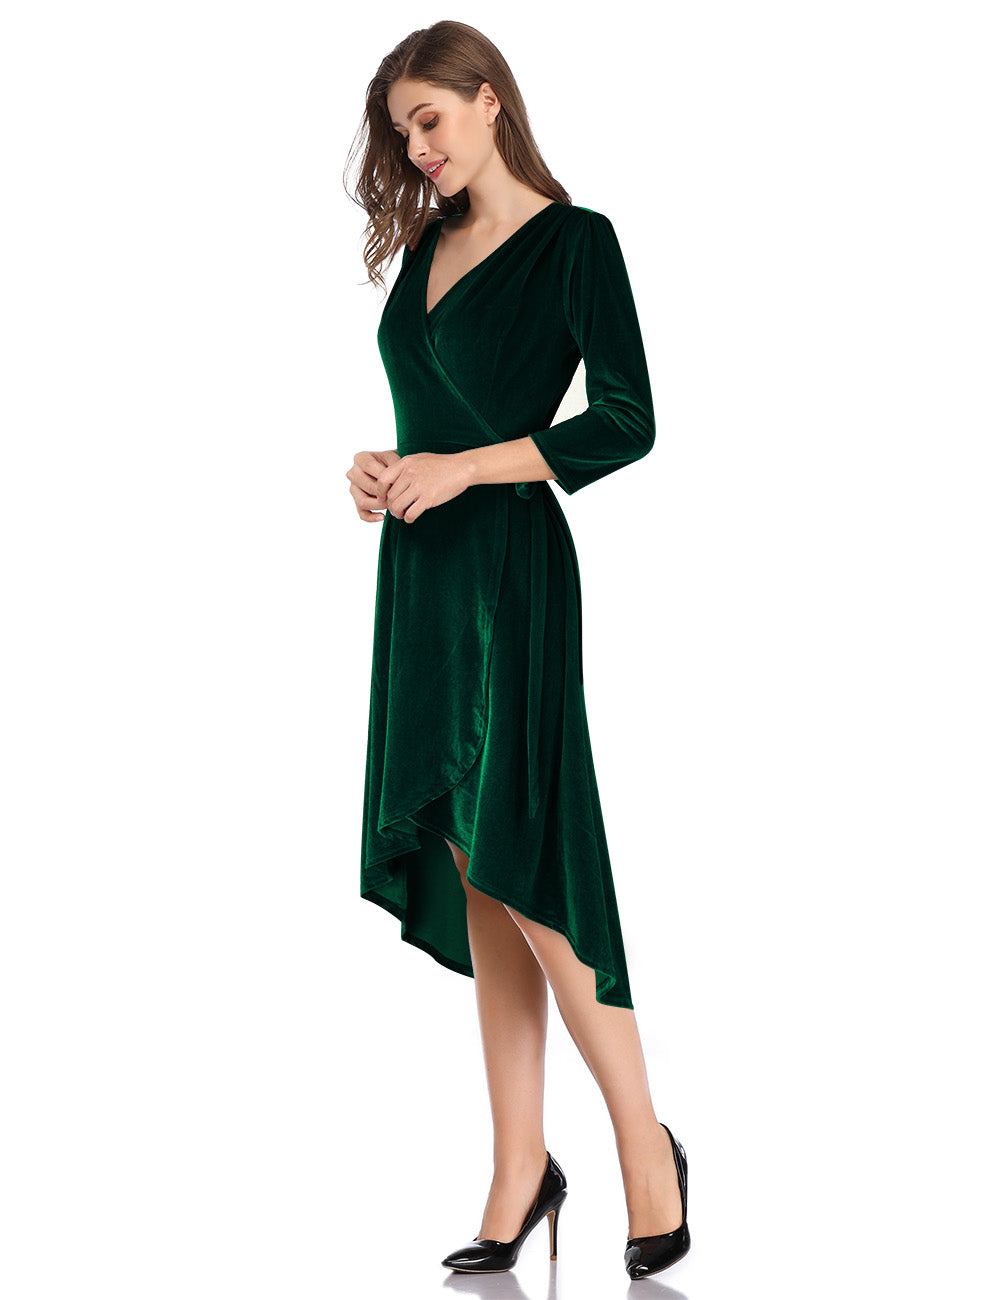 YESFASHION Women's Velvet V-Neck Long Sleeve Casual Party Dress Green